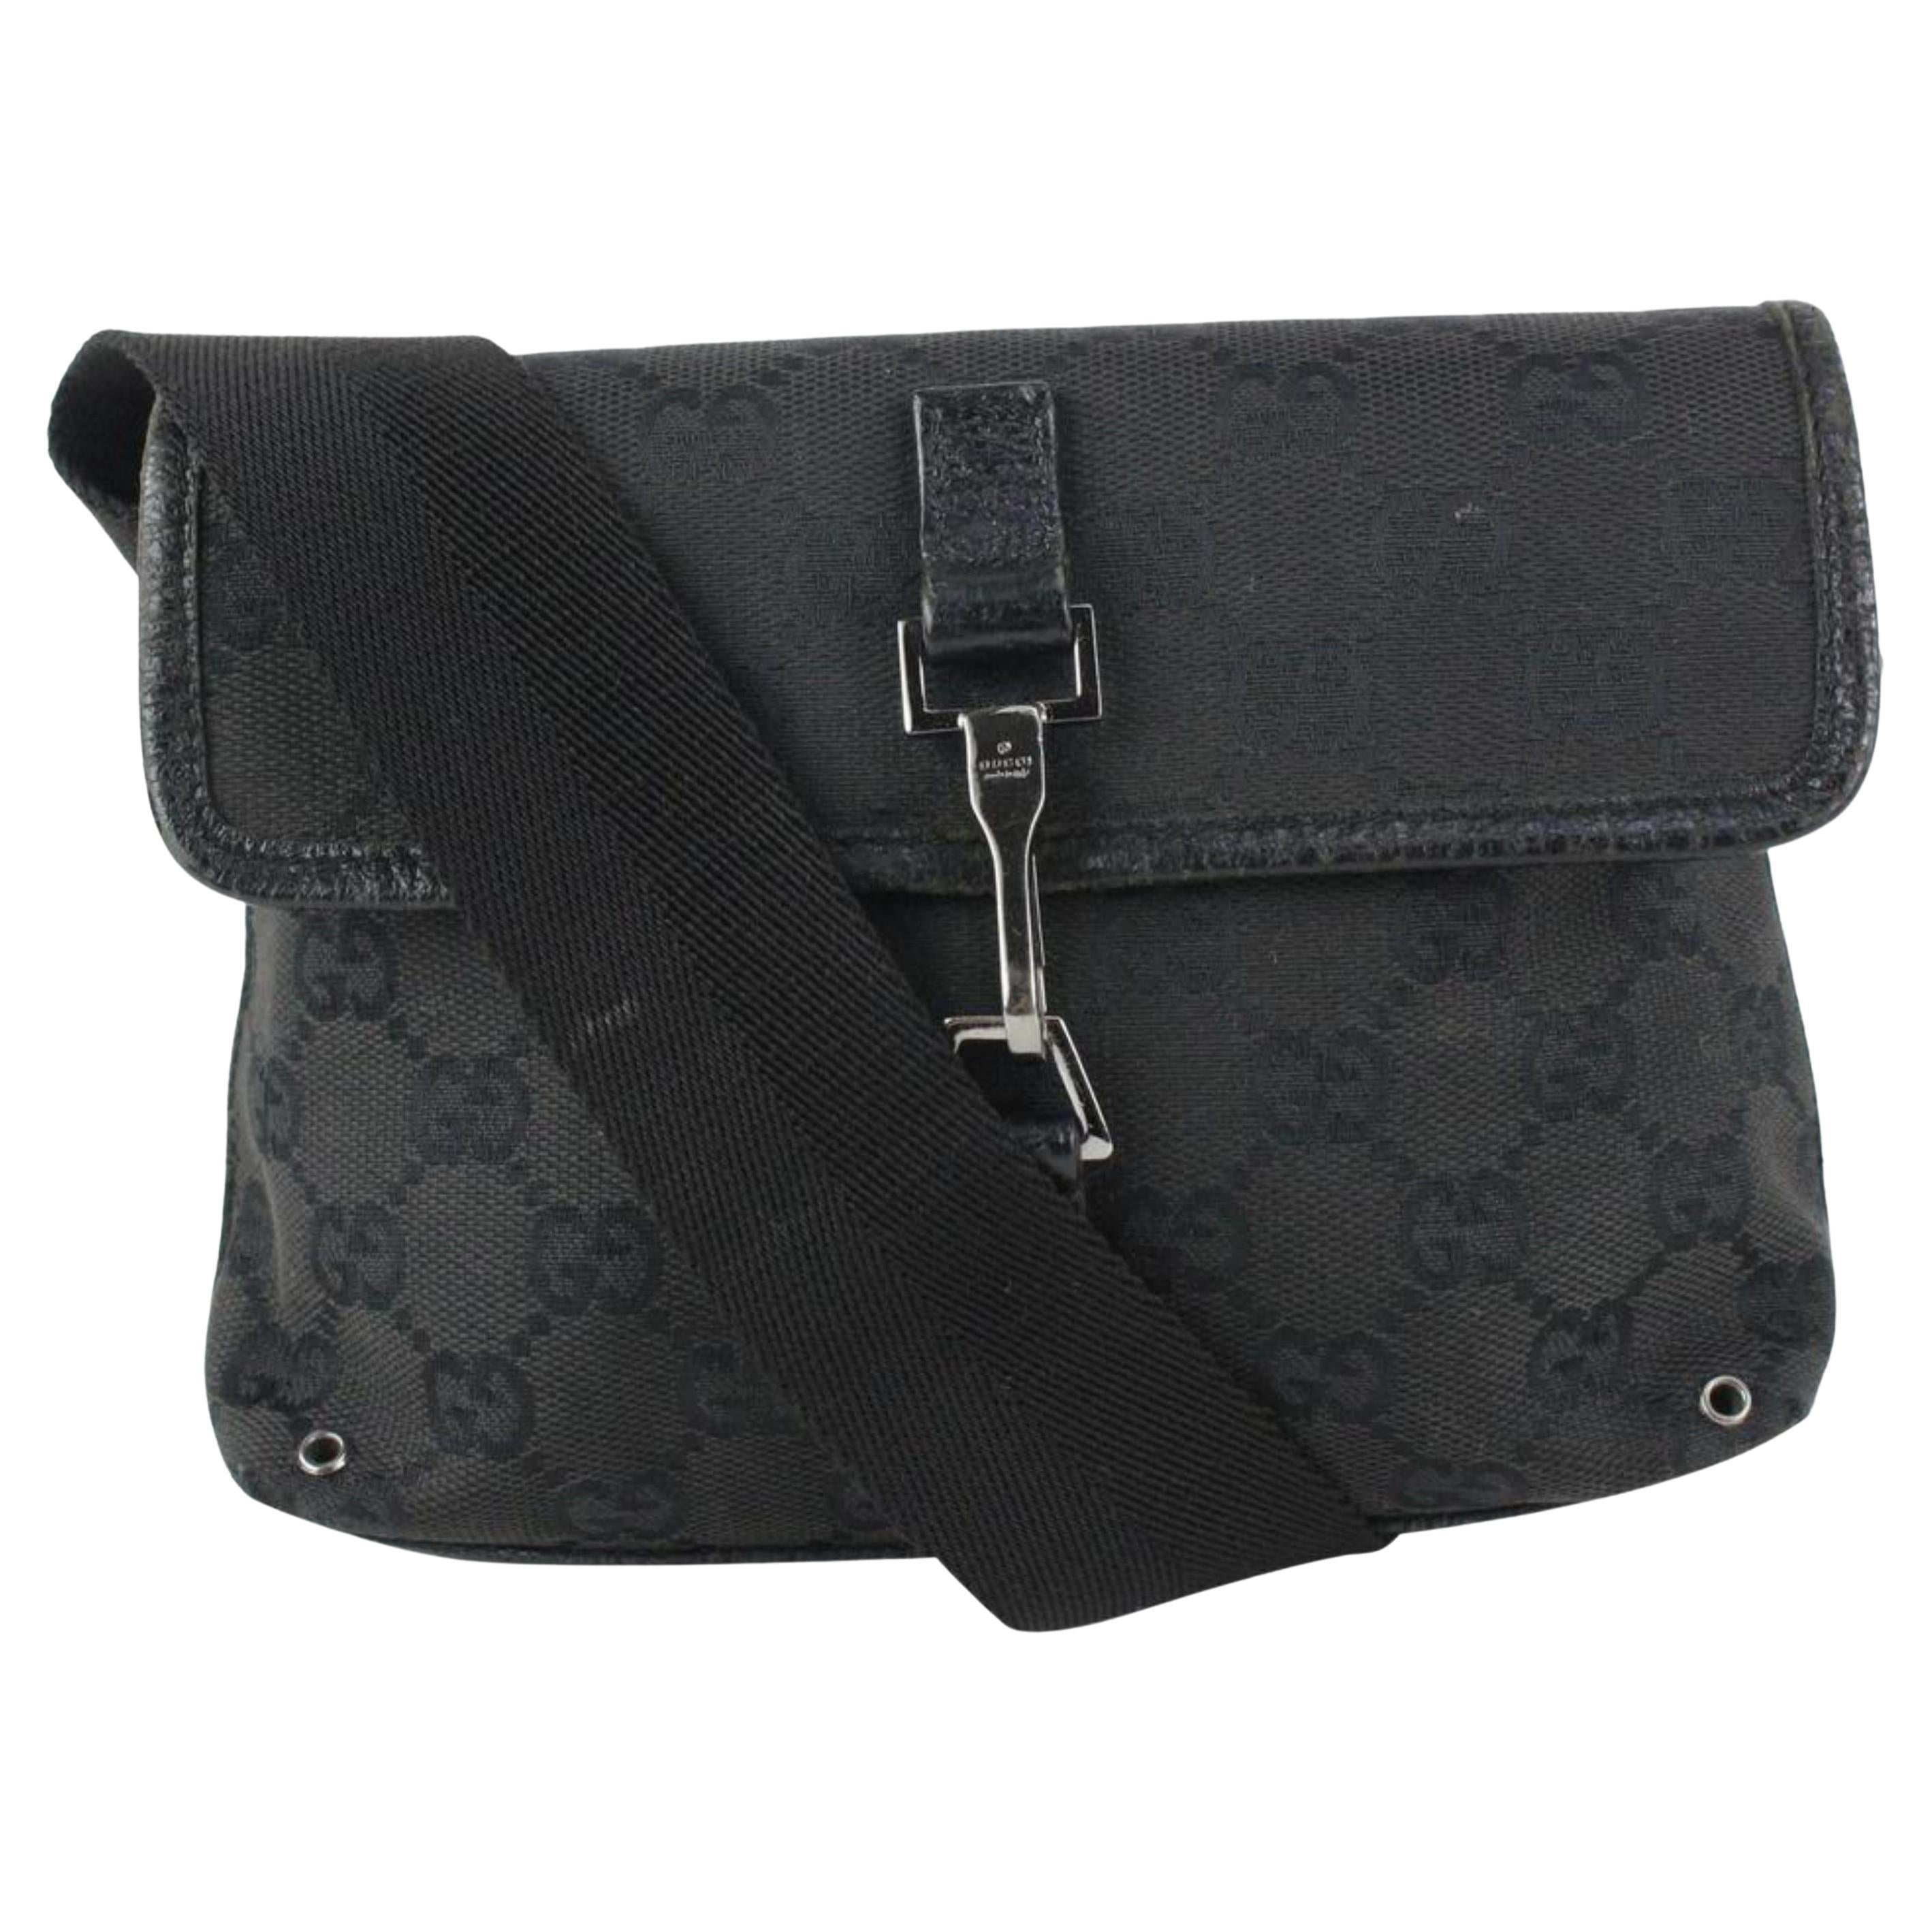 Gucci Black Monogram GG Belt Bag Fanny Pack Waist Pouch 927gk26 For Sale